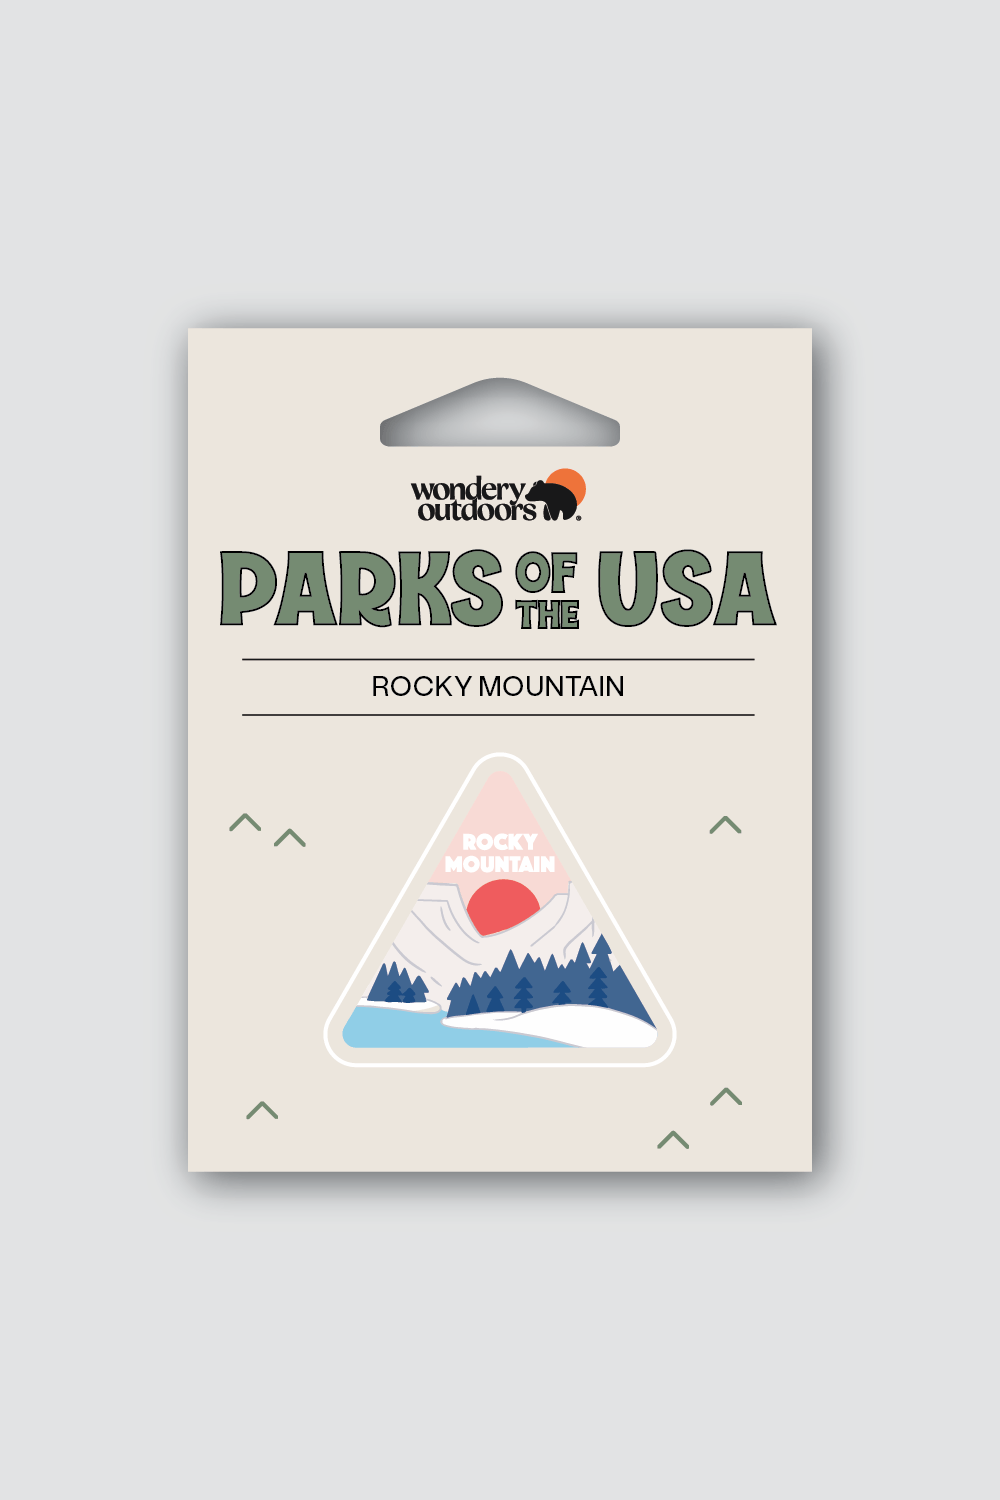 #national park_rocky mountain _USA National Parks souvenir sticker gift sets